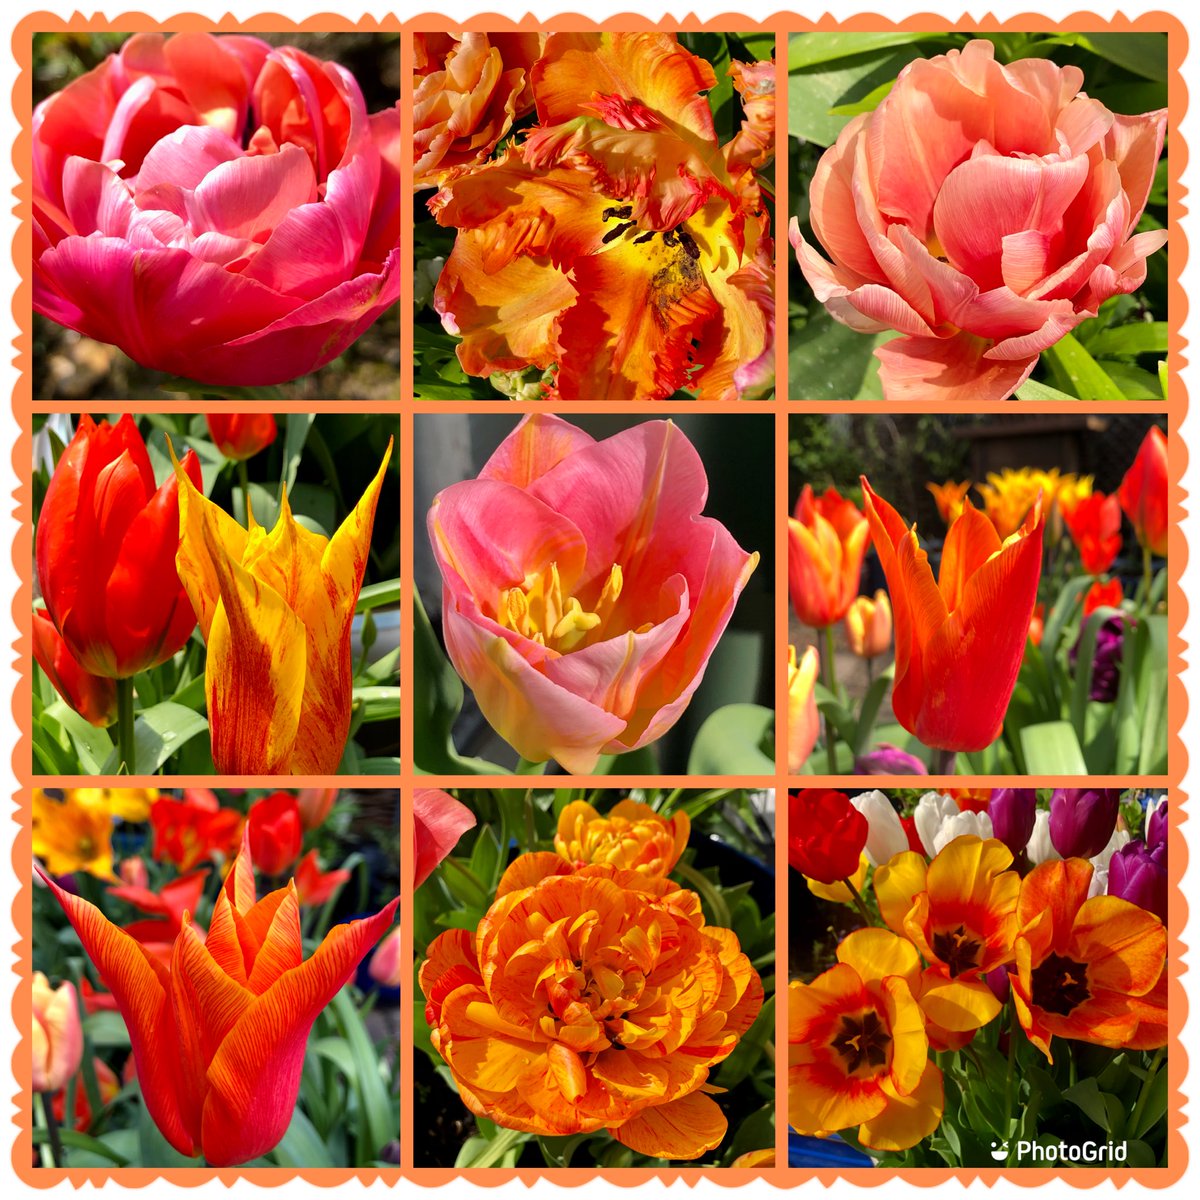 #TulipTuesday #Tulips #Colourful #TuesdayFeeling #Flowers #MyGarden Tulip love 🌷🌷🌷